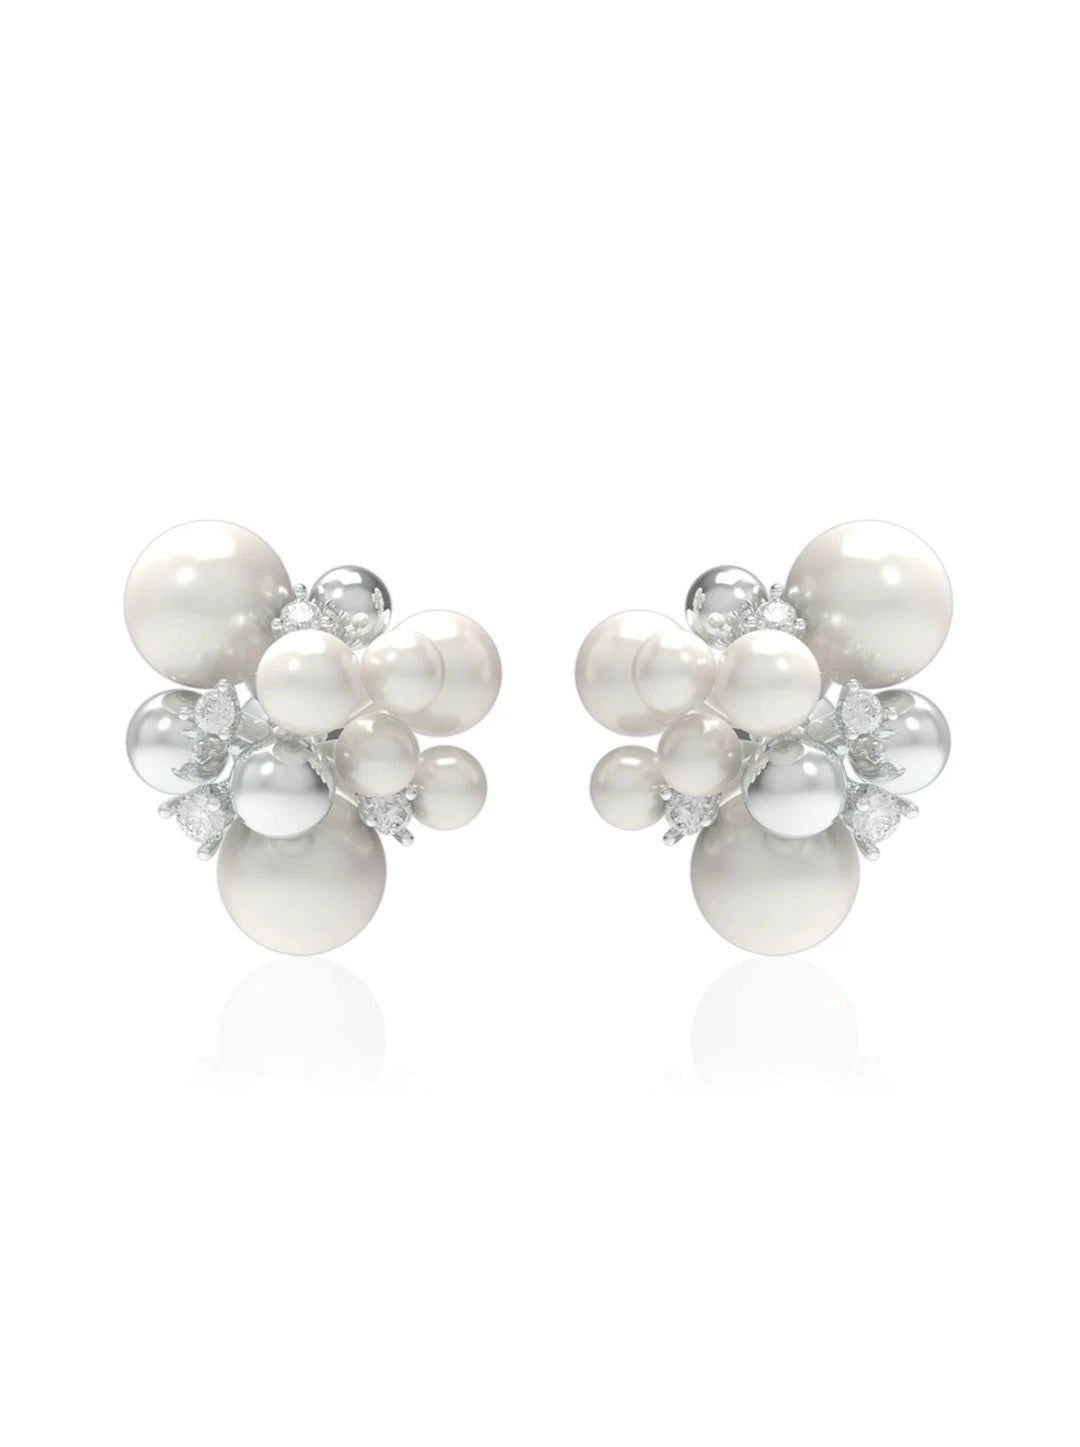 Explosion pearl earrings B2643